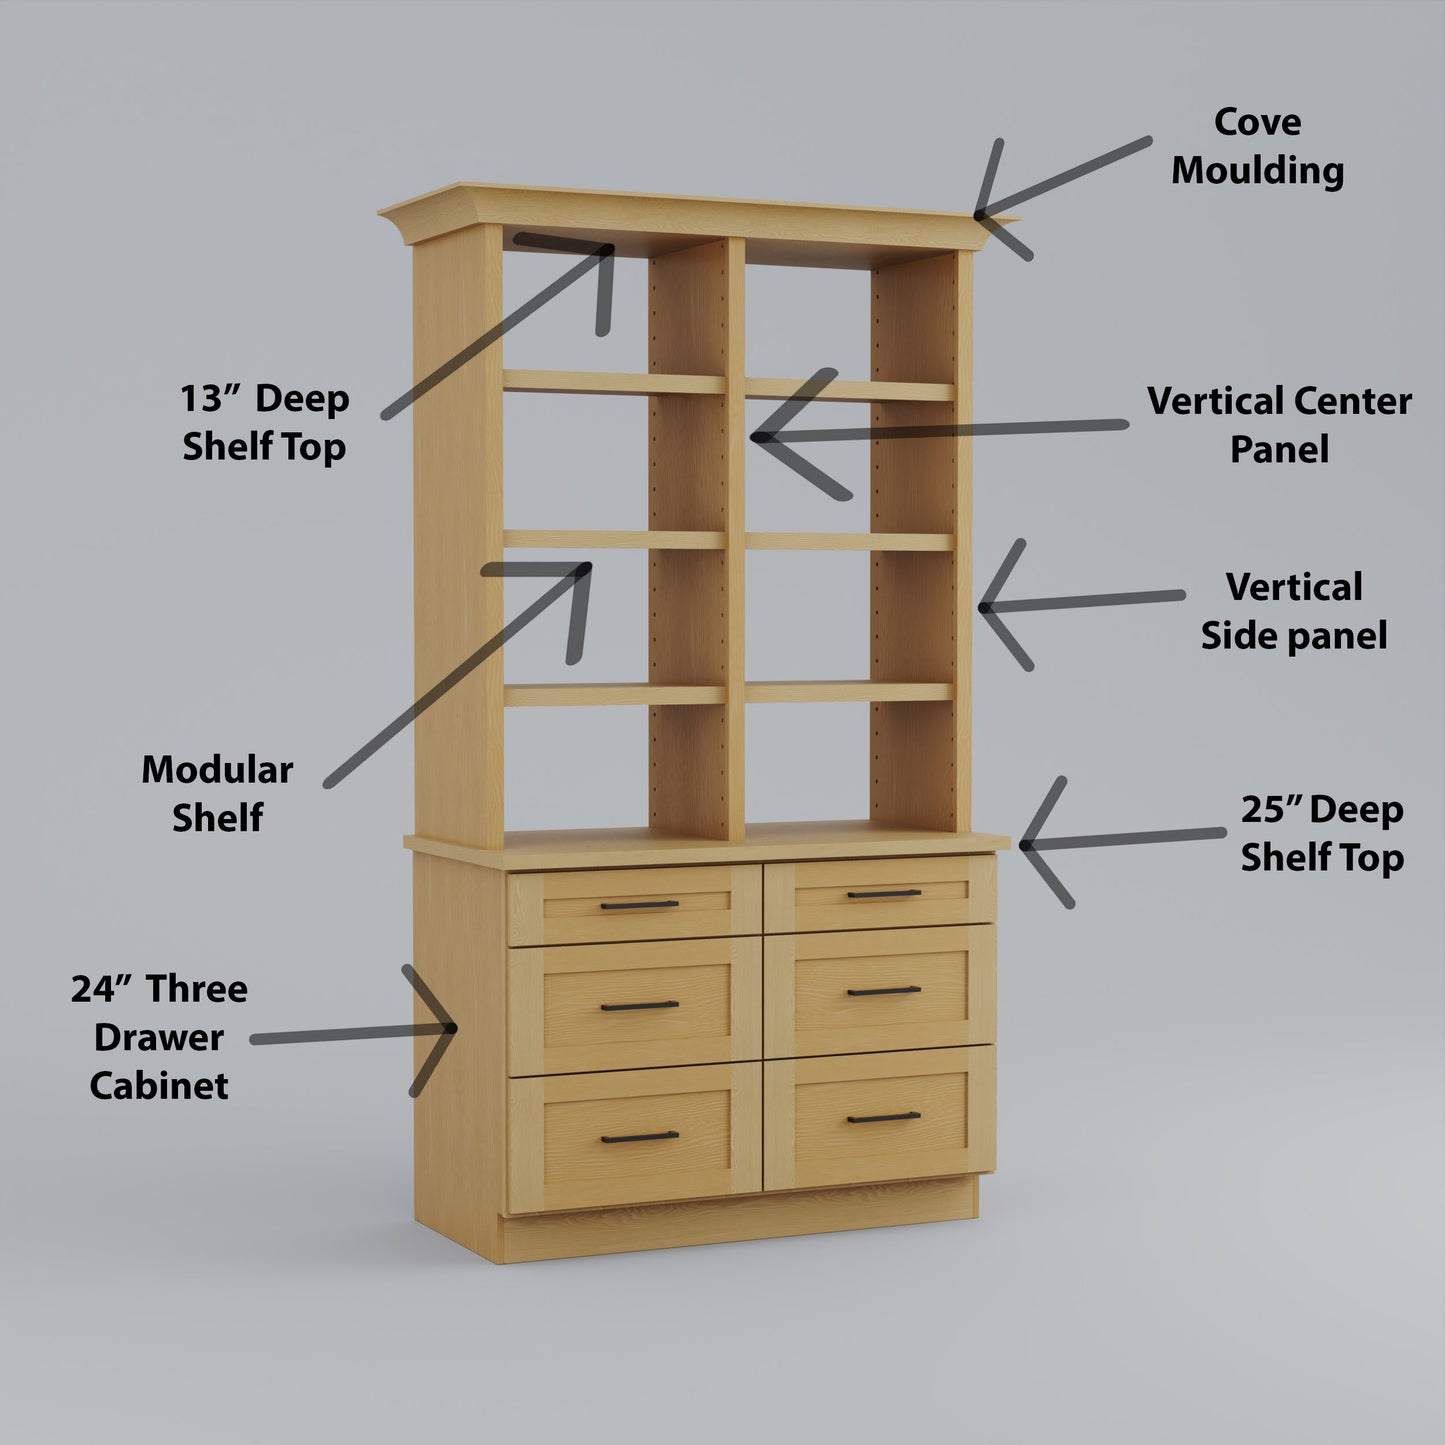 Modular Closet Shelf 1.5” Thick For Lanae Modular Shelving